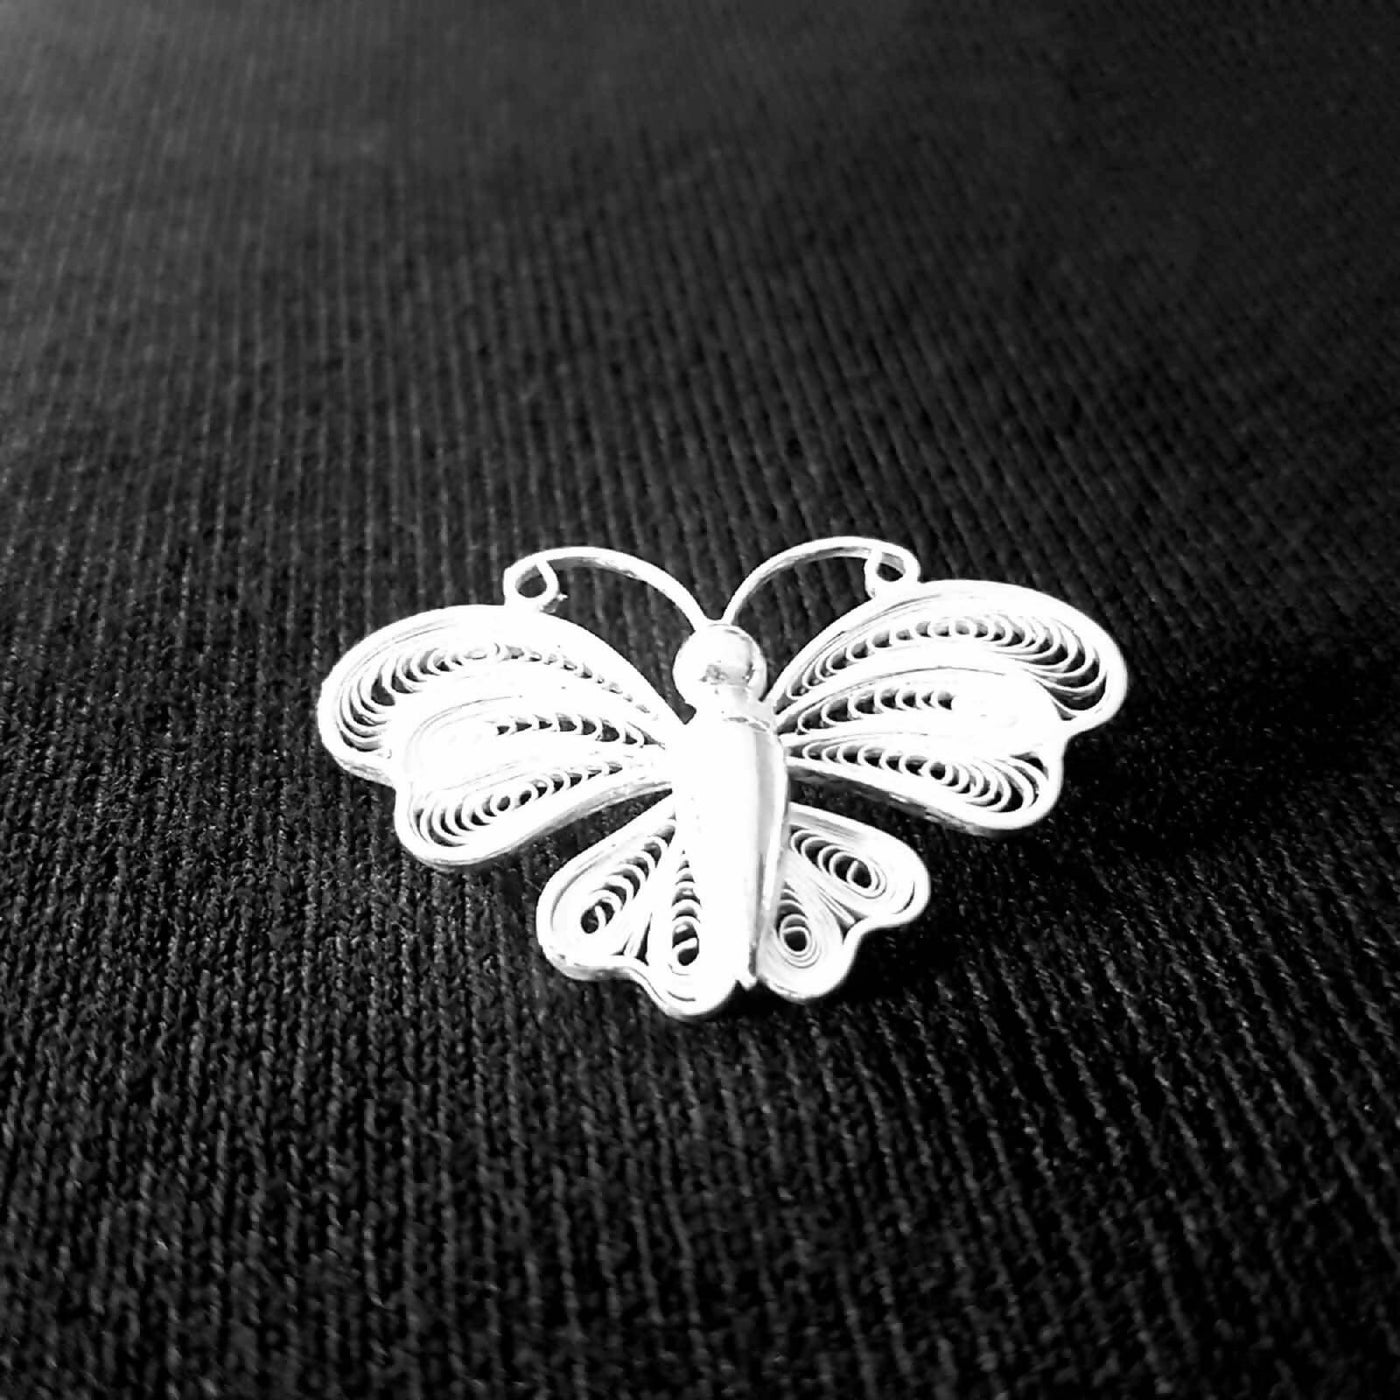 Butterfly shaped Silver Filigree Brooch SJ-Brooch-994 - Fashion & Lifestyle - 1